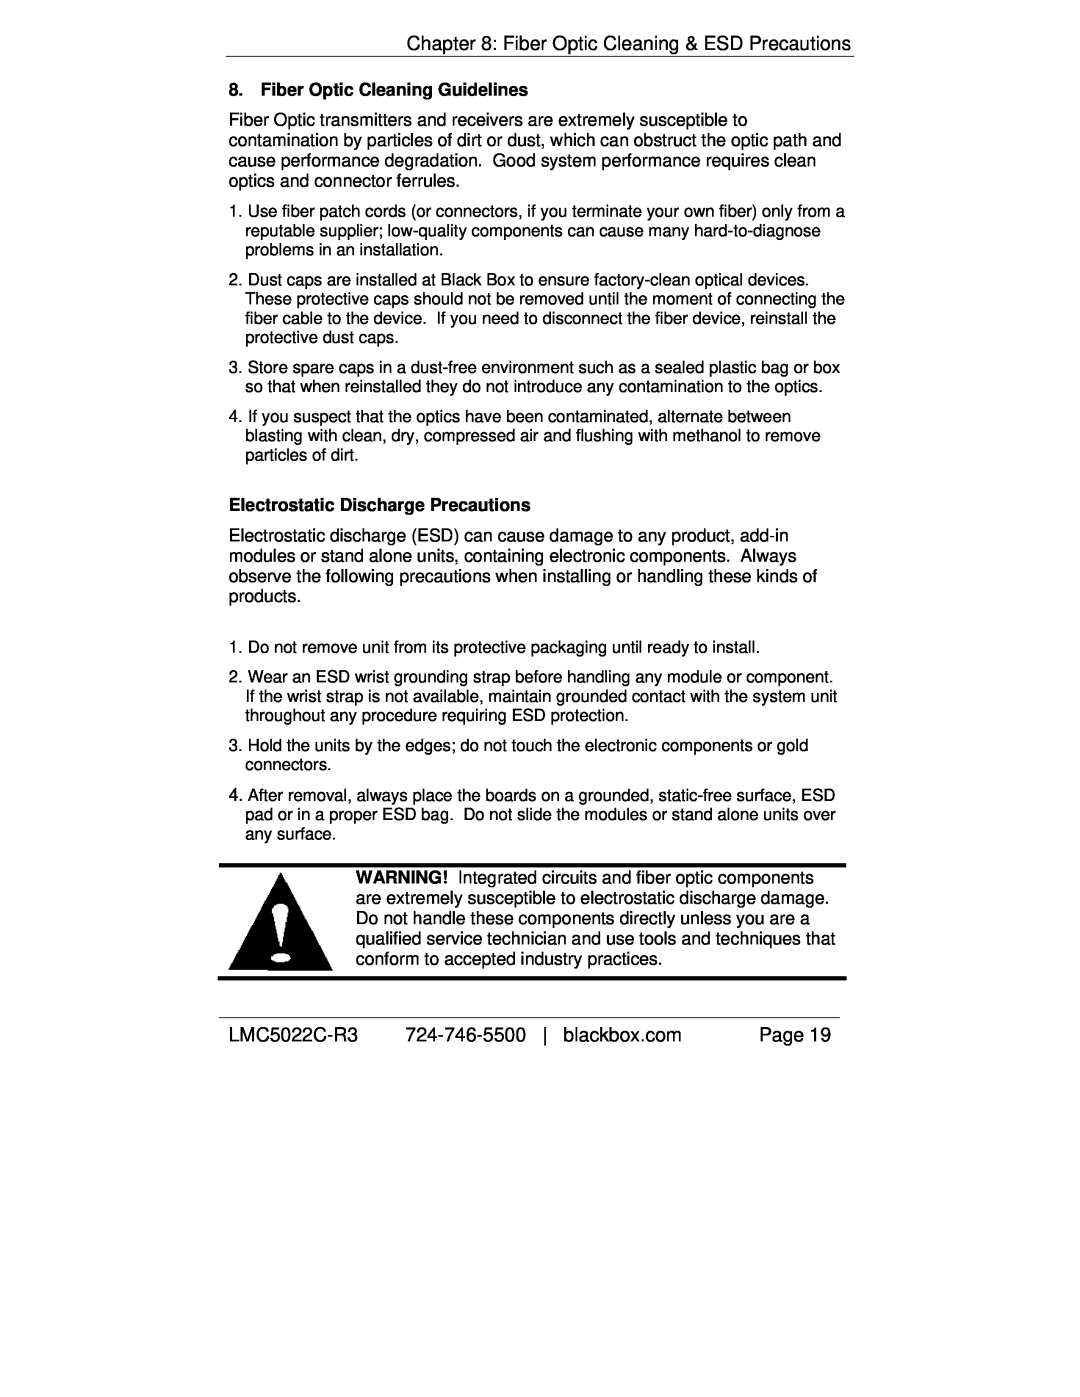 Black Box LMC5181C-R3 manual Fiber Optic Cleaning & ESD Precautions, Fiber Optic Cleaning Guidelines, LMC5022C-R3, Page 